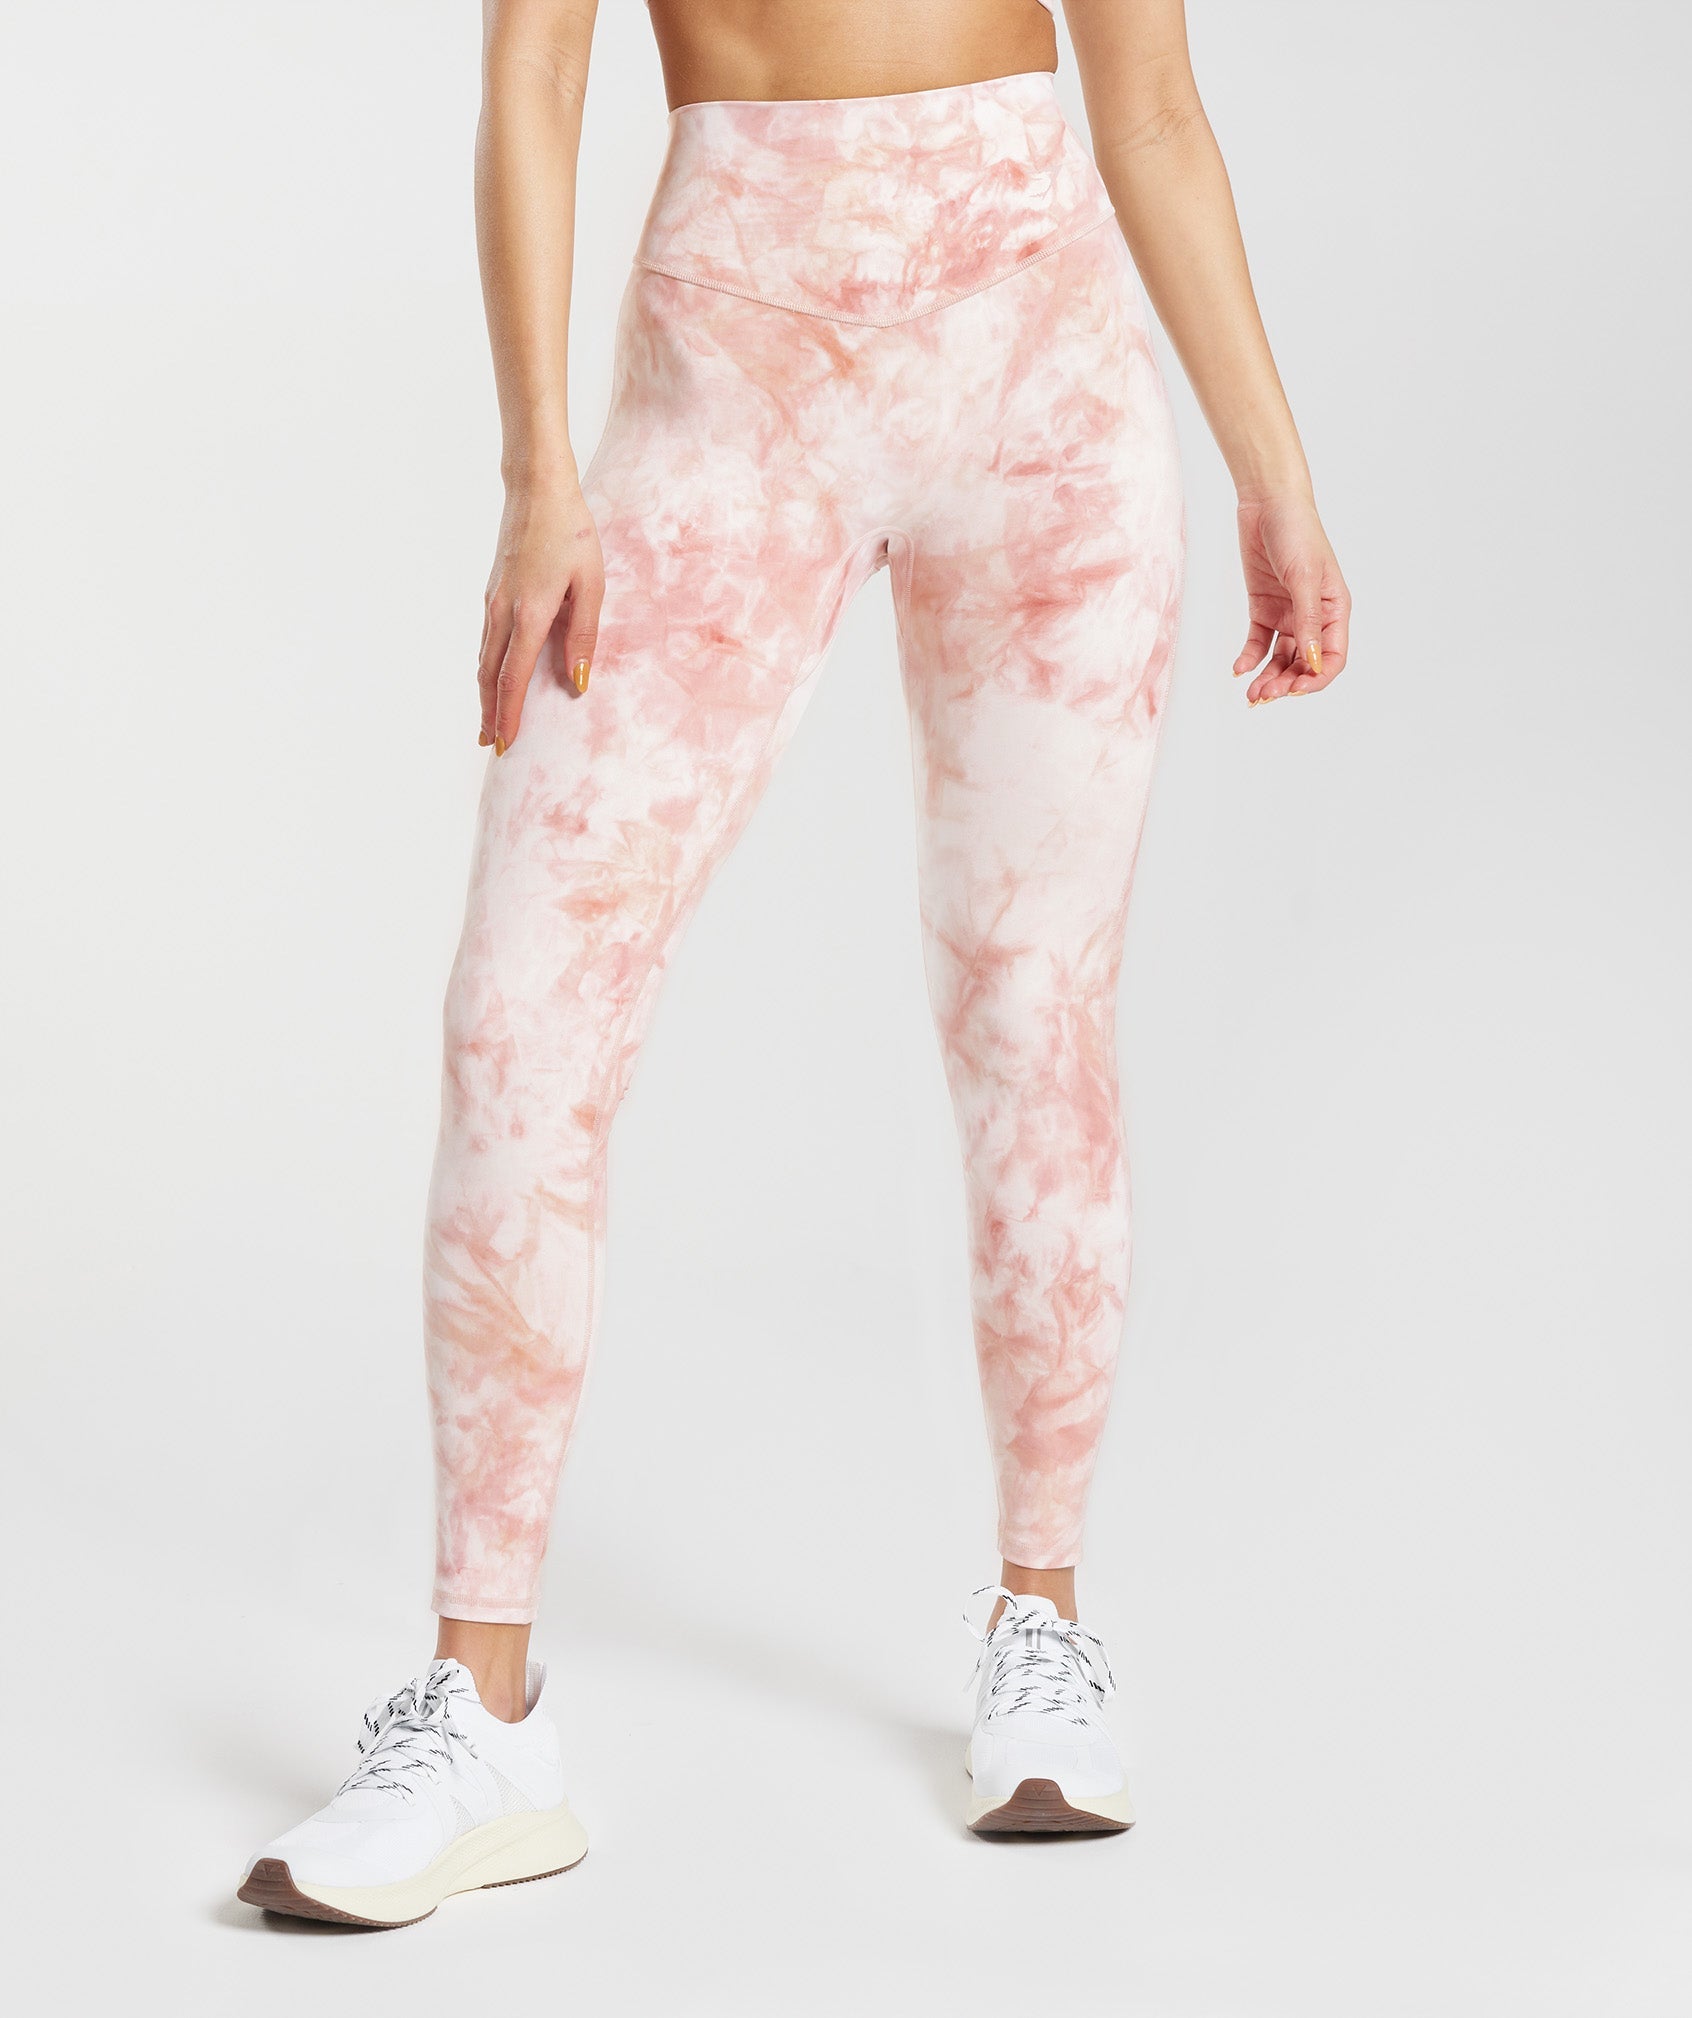 Gymshark Elevate Spray Dye Leggings - White/Misty Pink/Scandi Pink